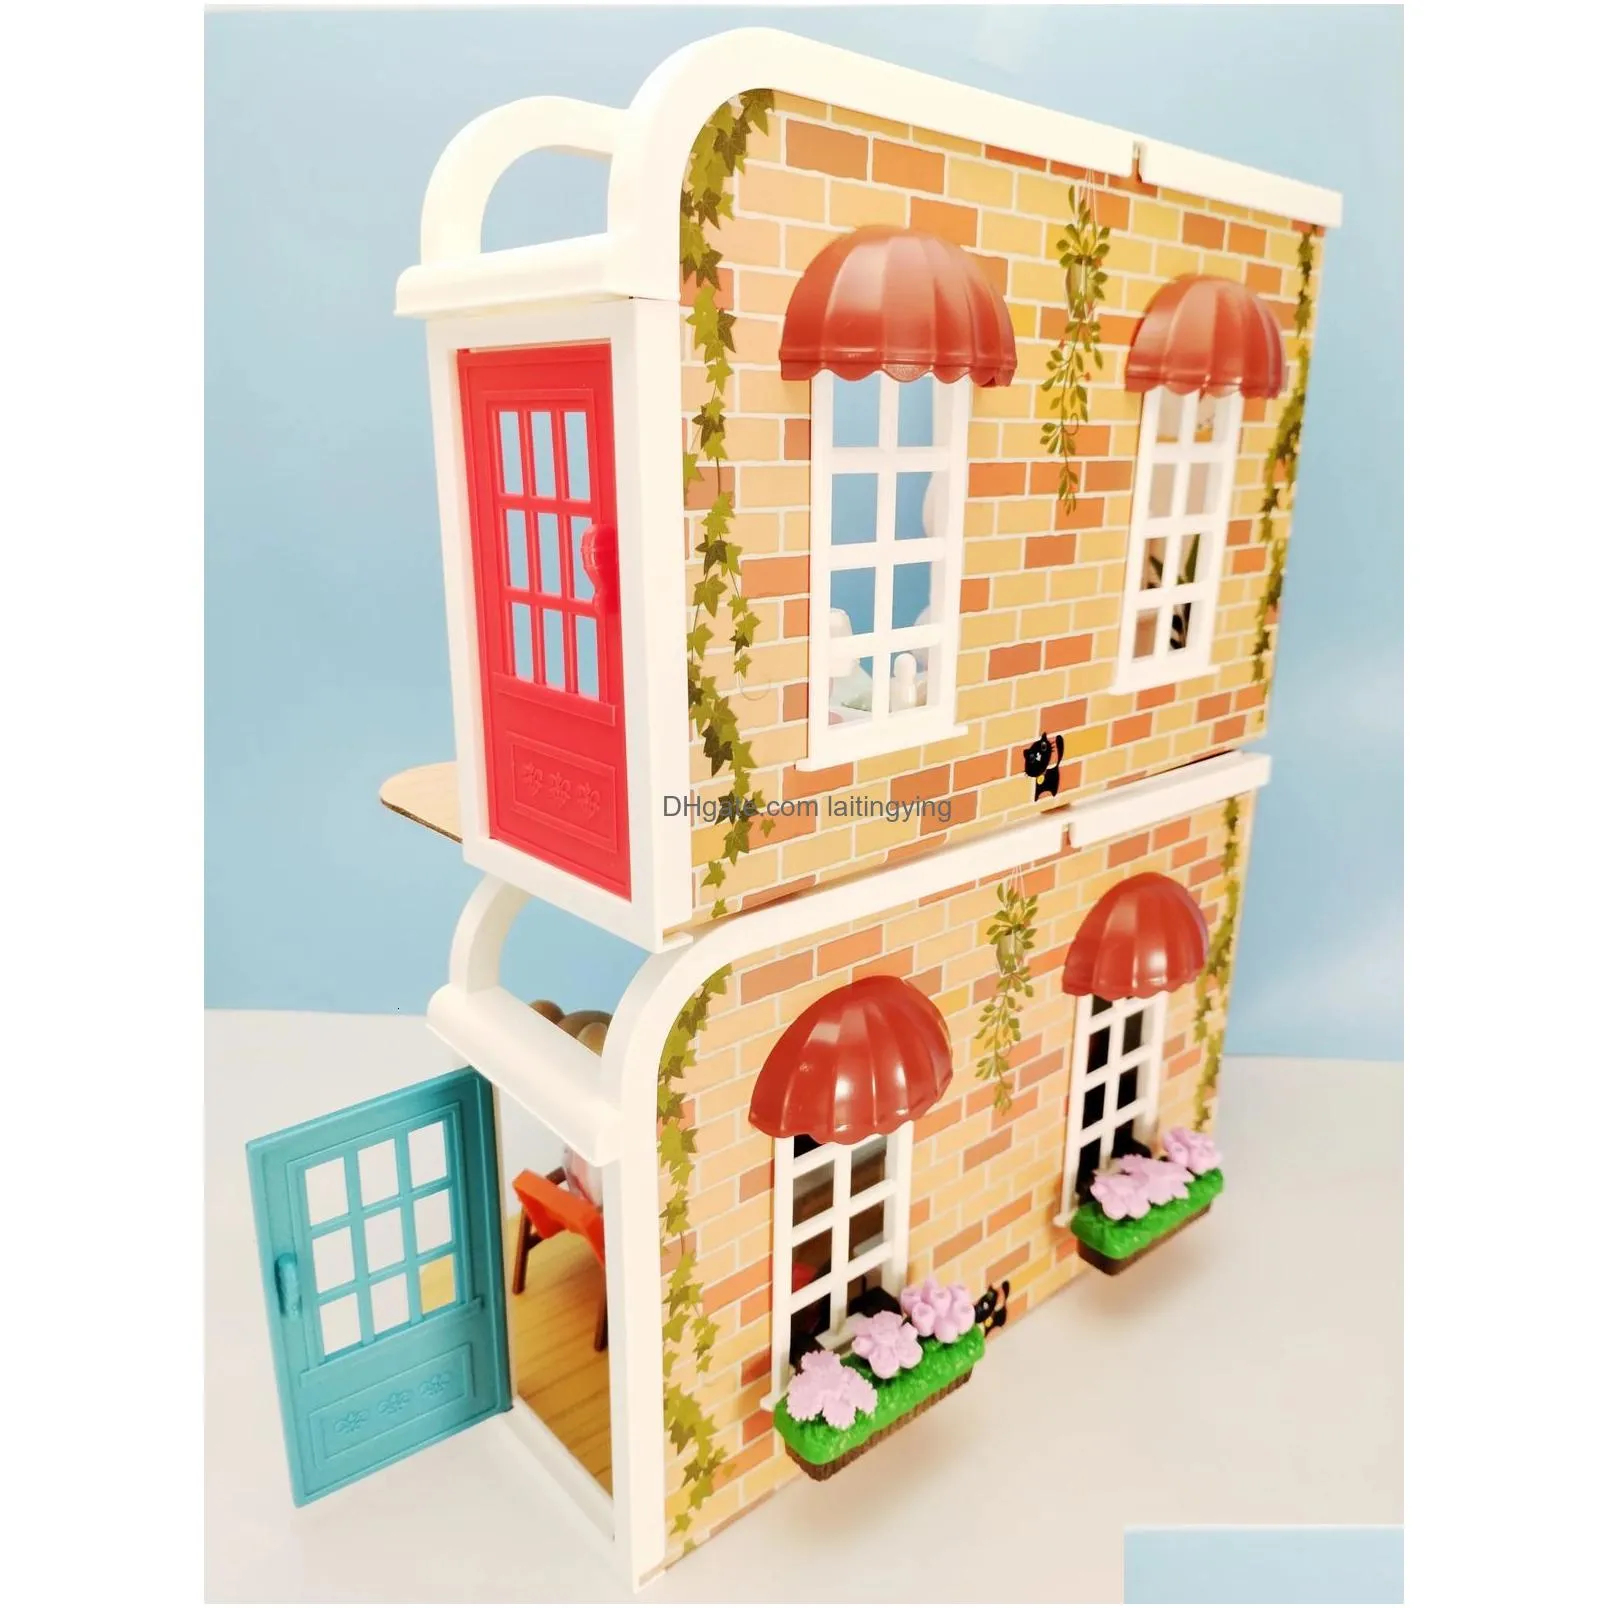 dolls miniature items dollhouse accessories and furniture mini toys set home shop scene livingroom pretend playset kids gifts 231017